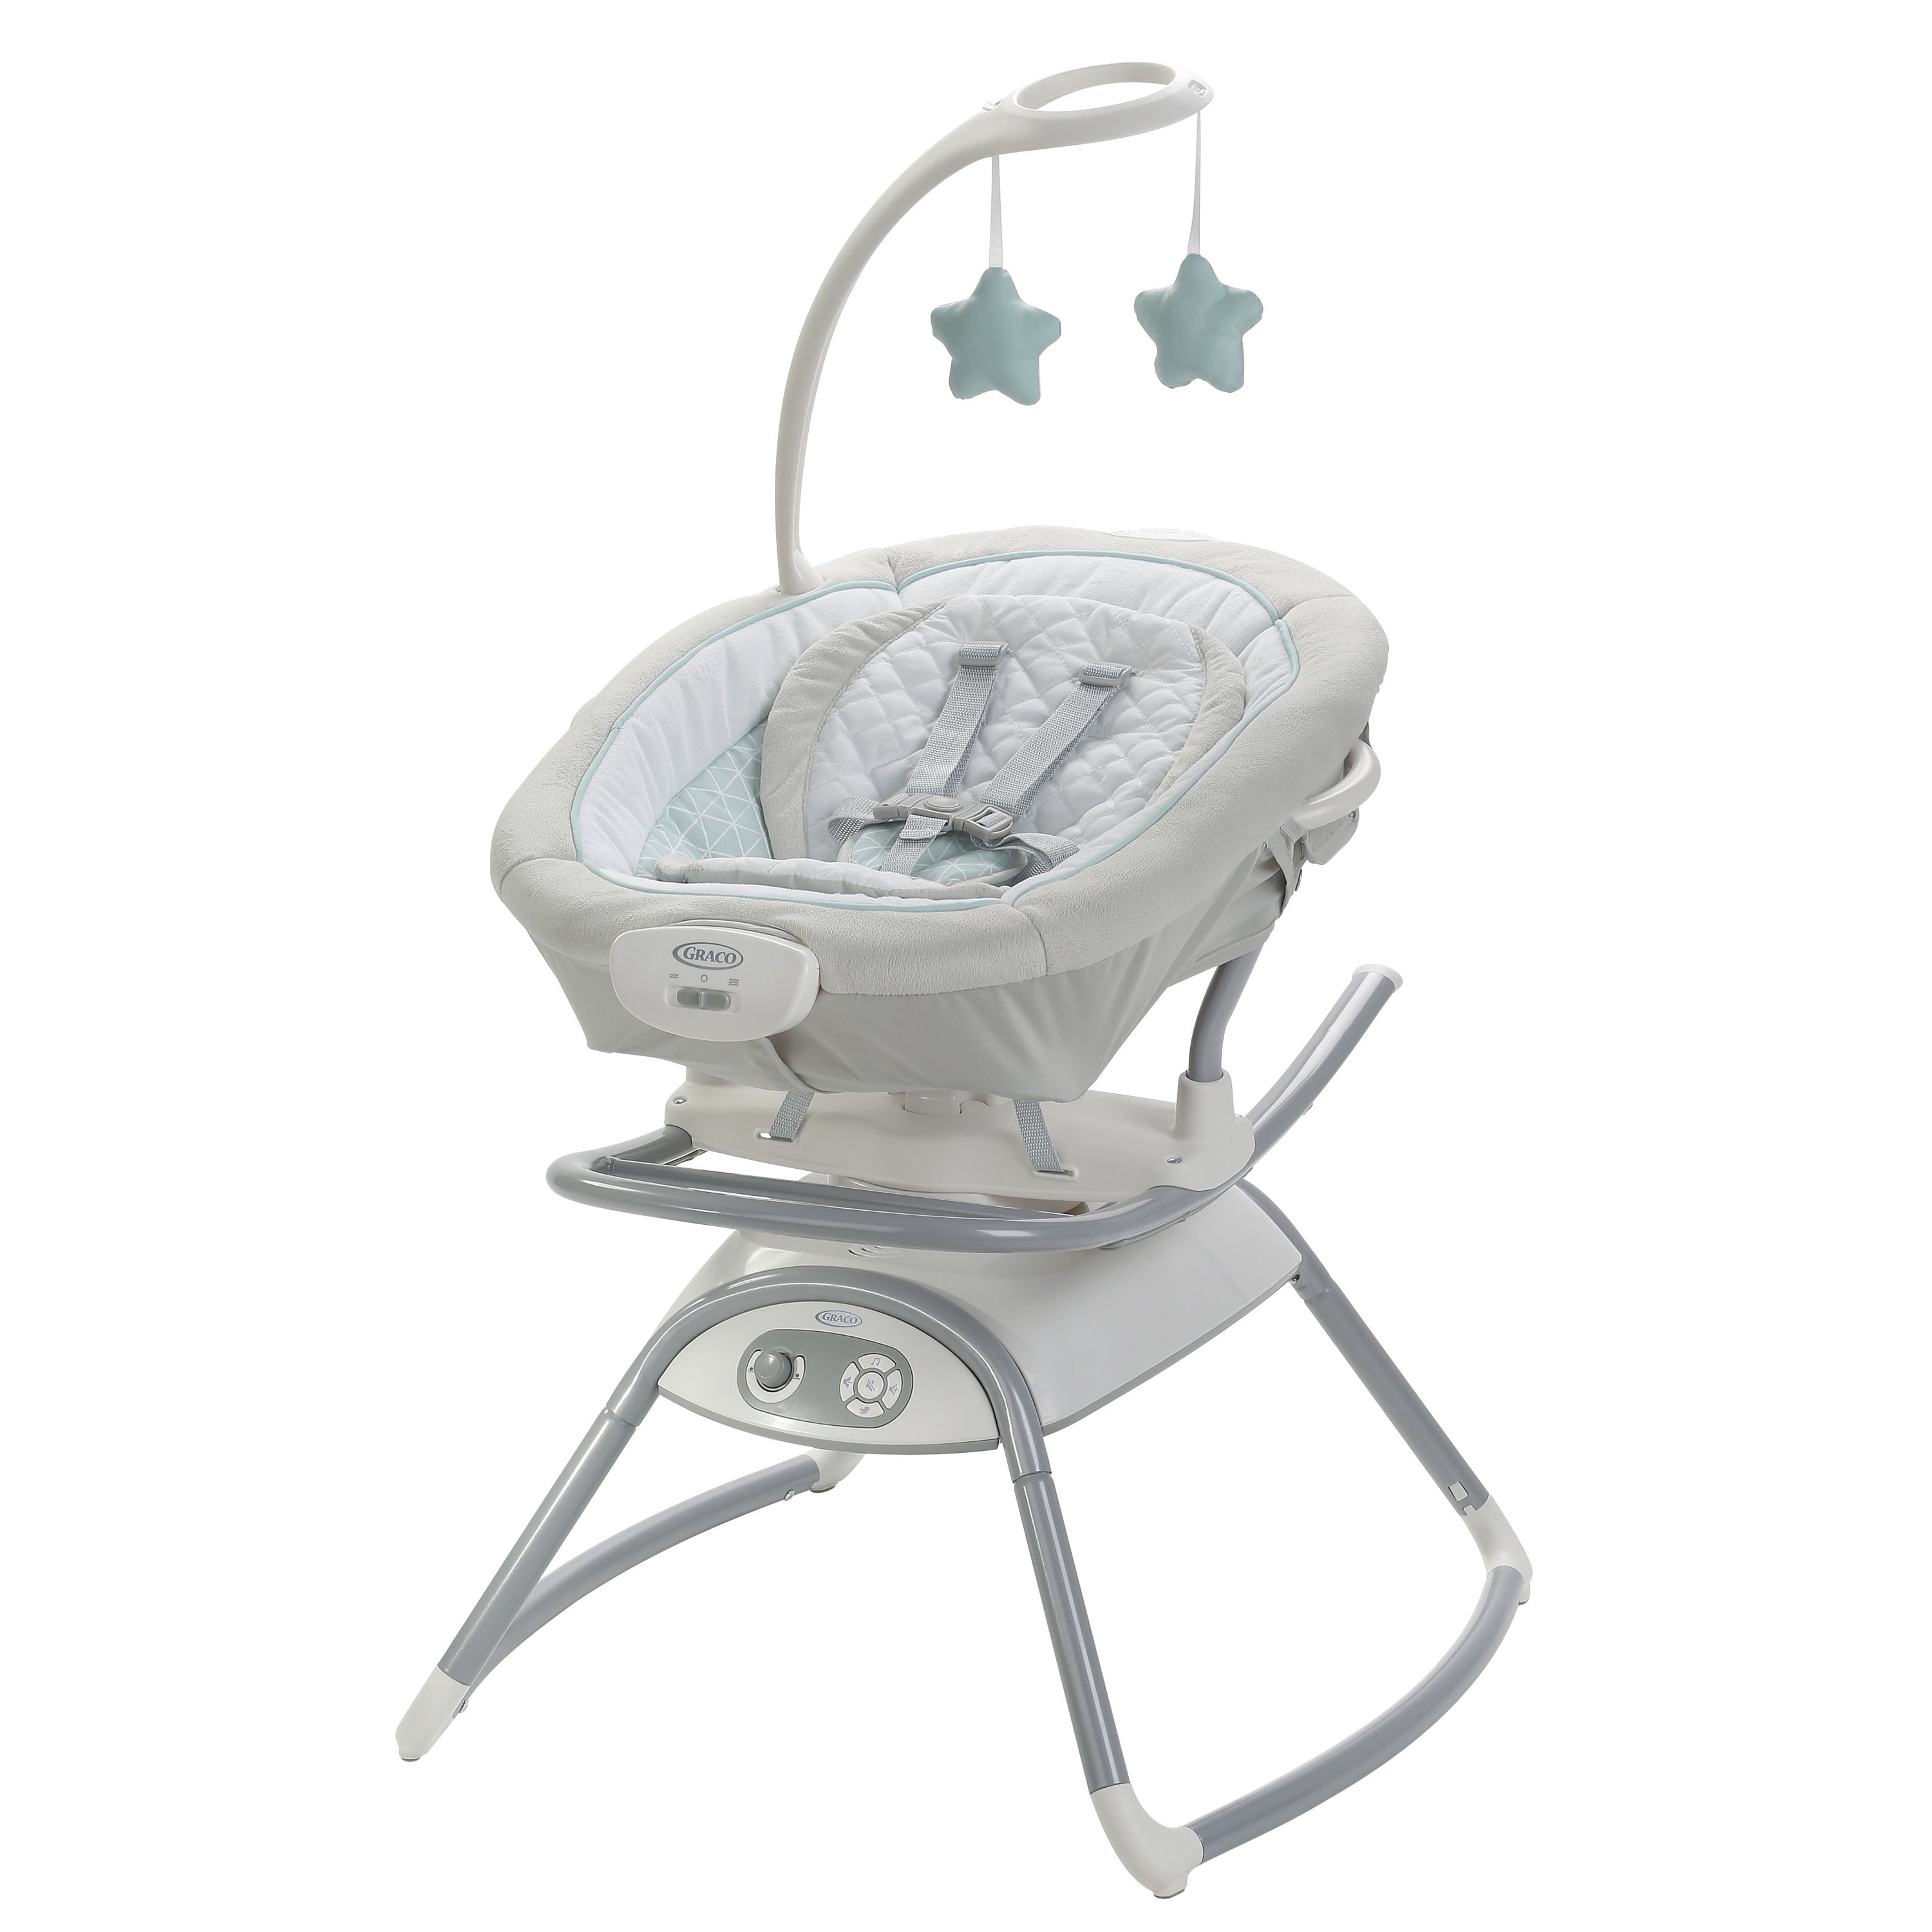 Graco Sweetpeace baby swing - Bouncer & rocker chairs - Cots, night-time &  nursery